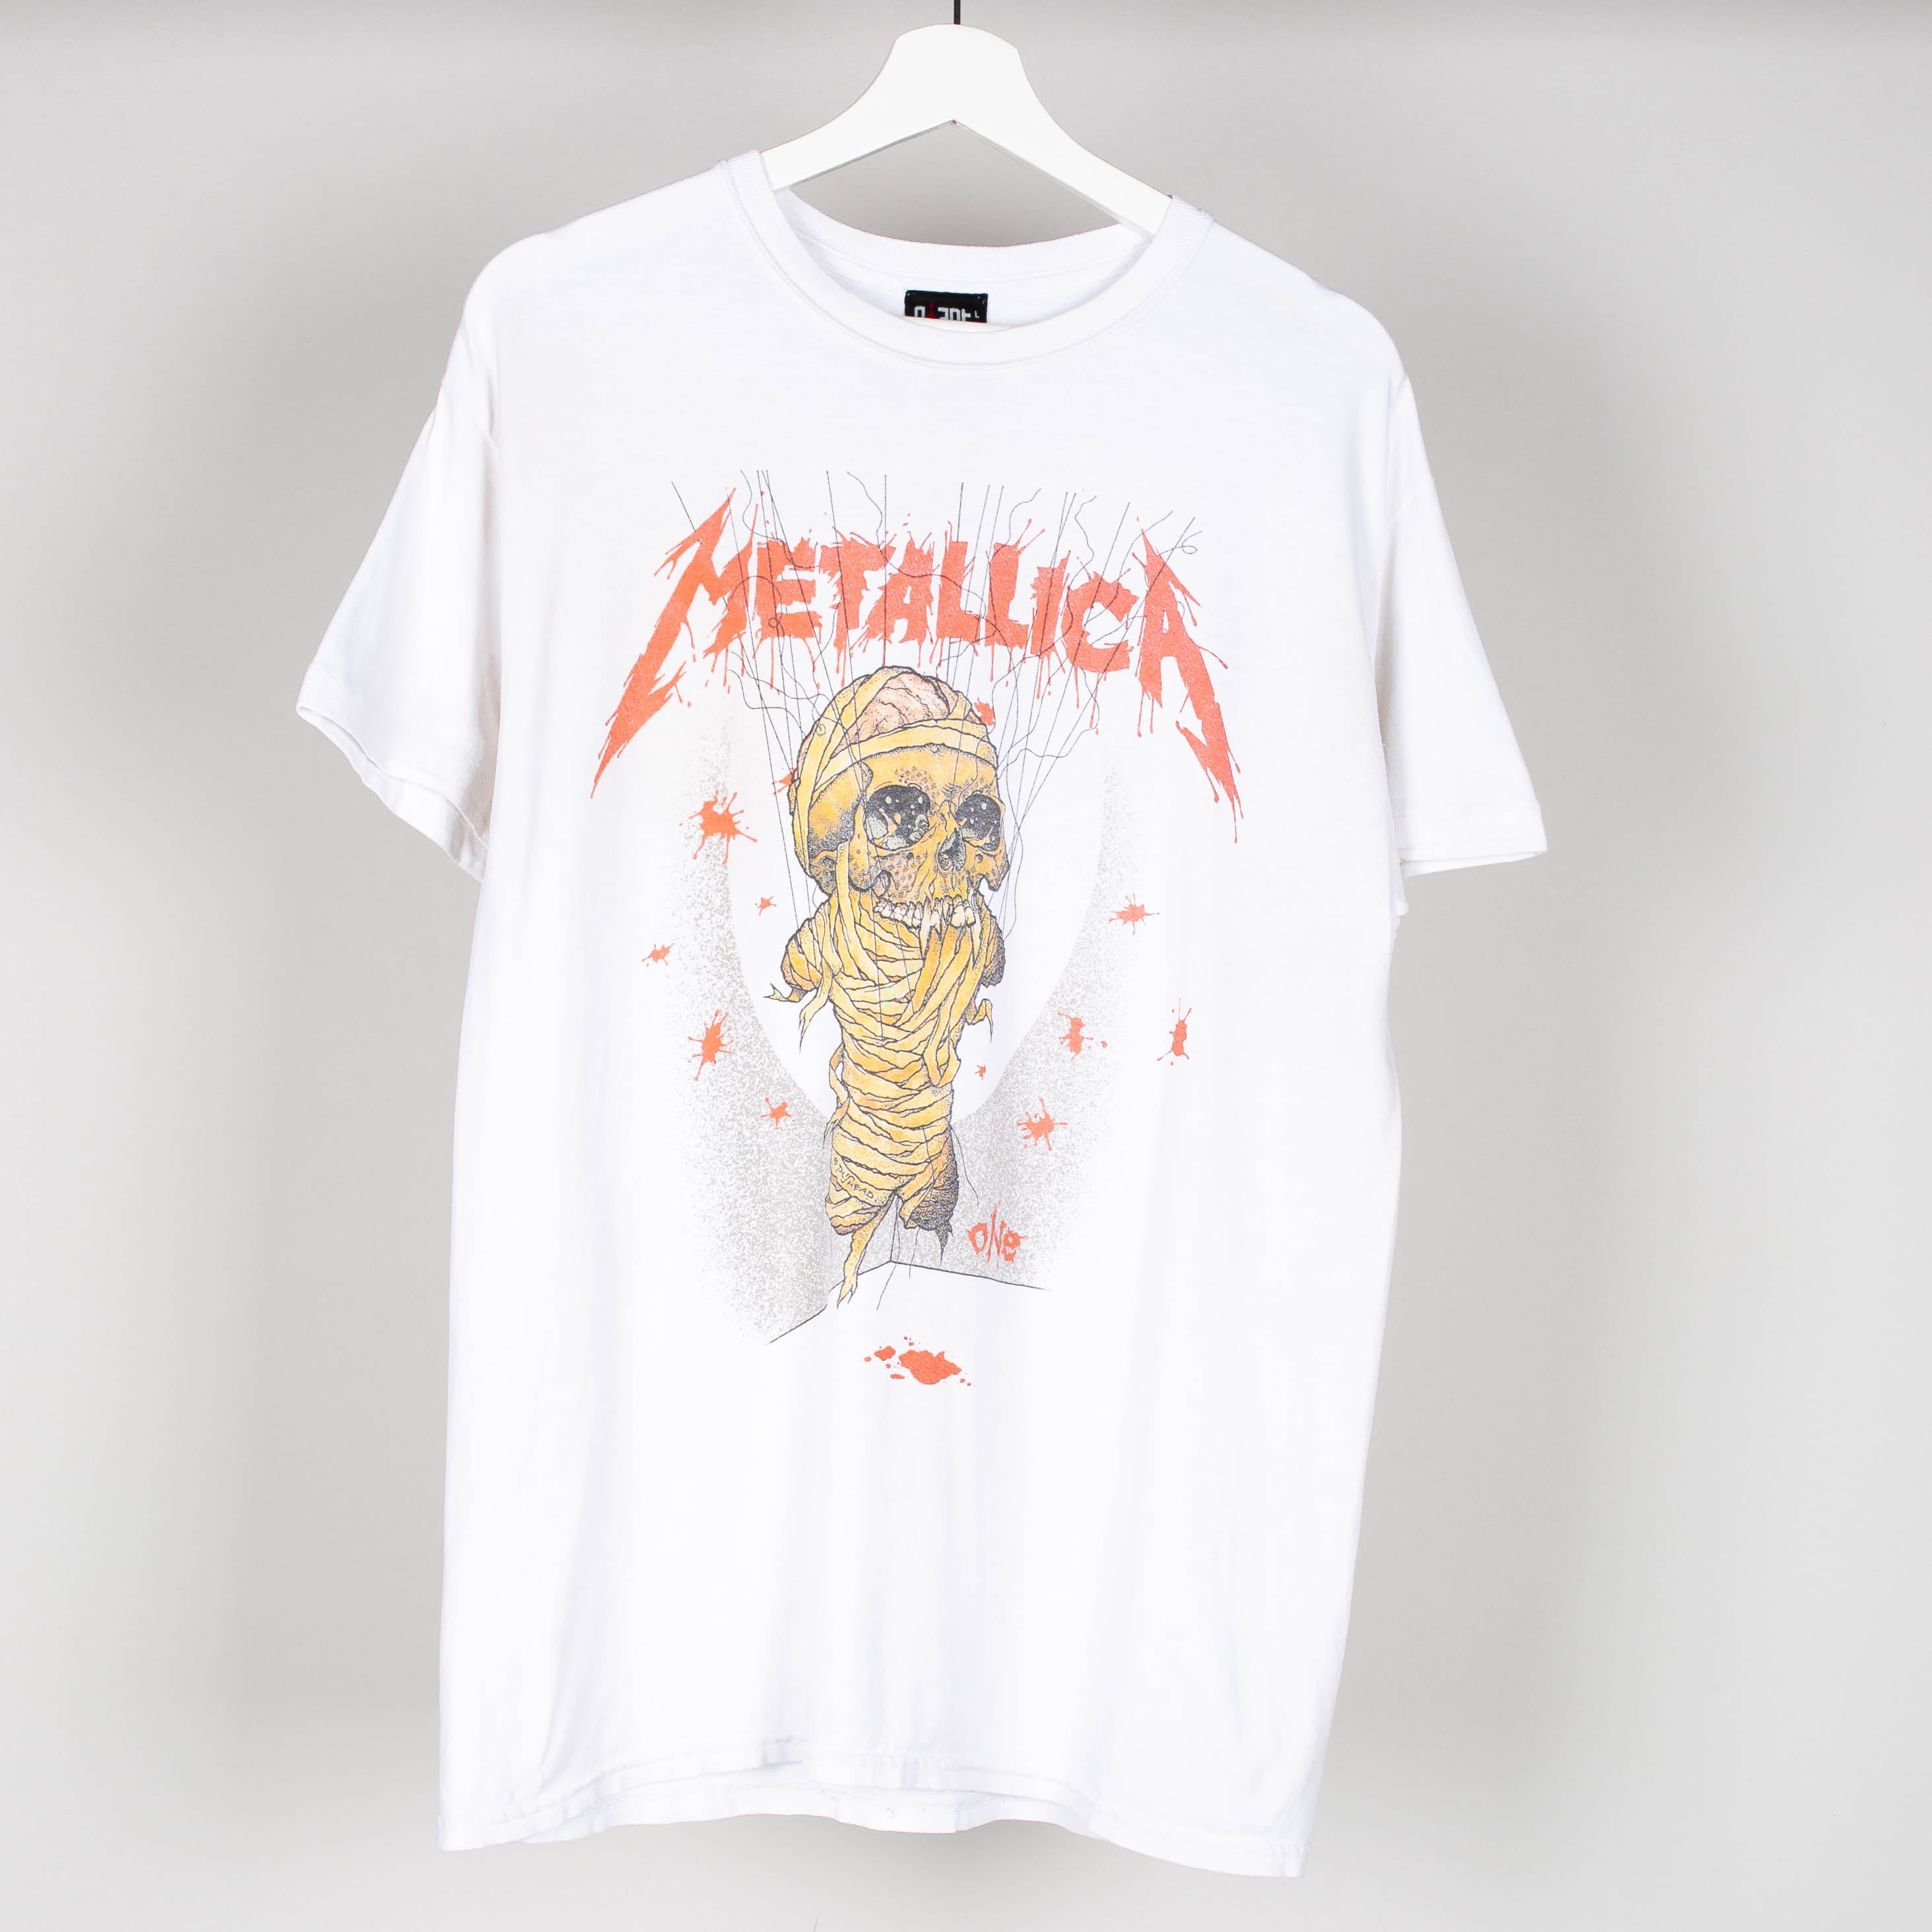 1990 Metallica Landmine Tour T-Shirt Size Large